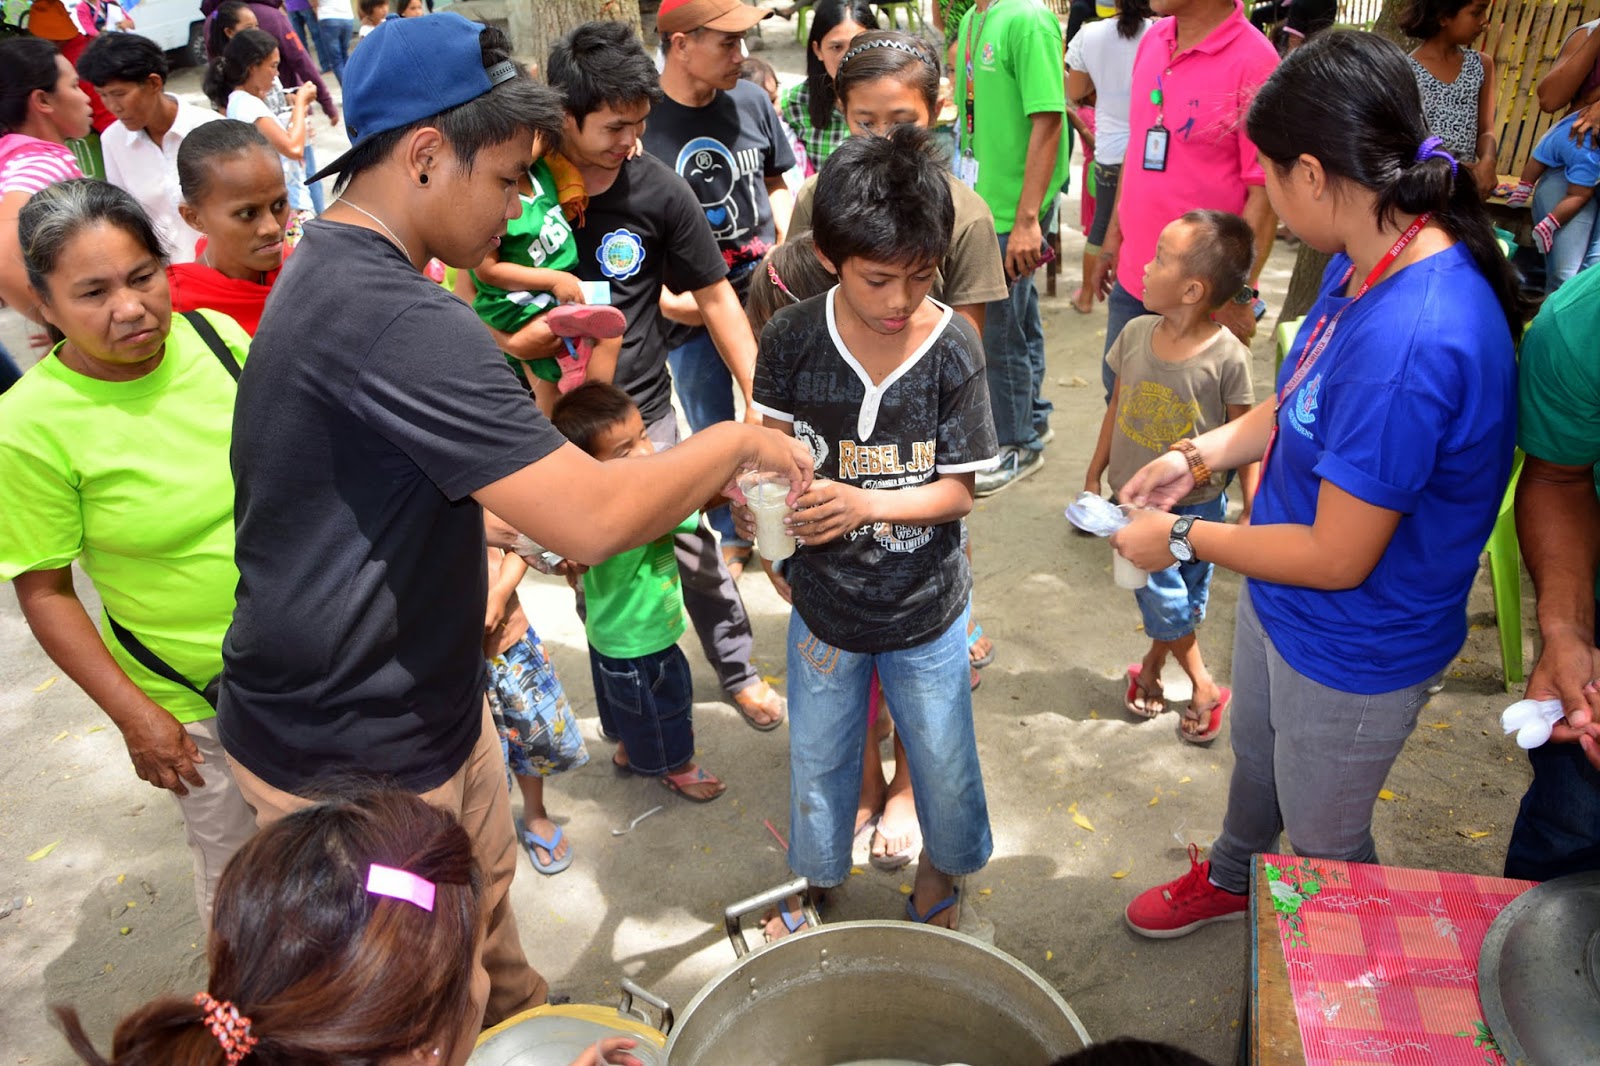 I Love General Santos City, Philippines!: Feeding program for children